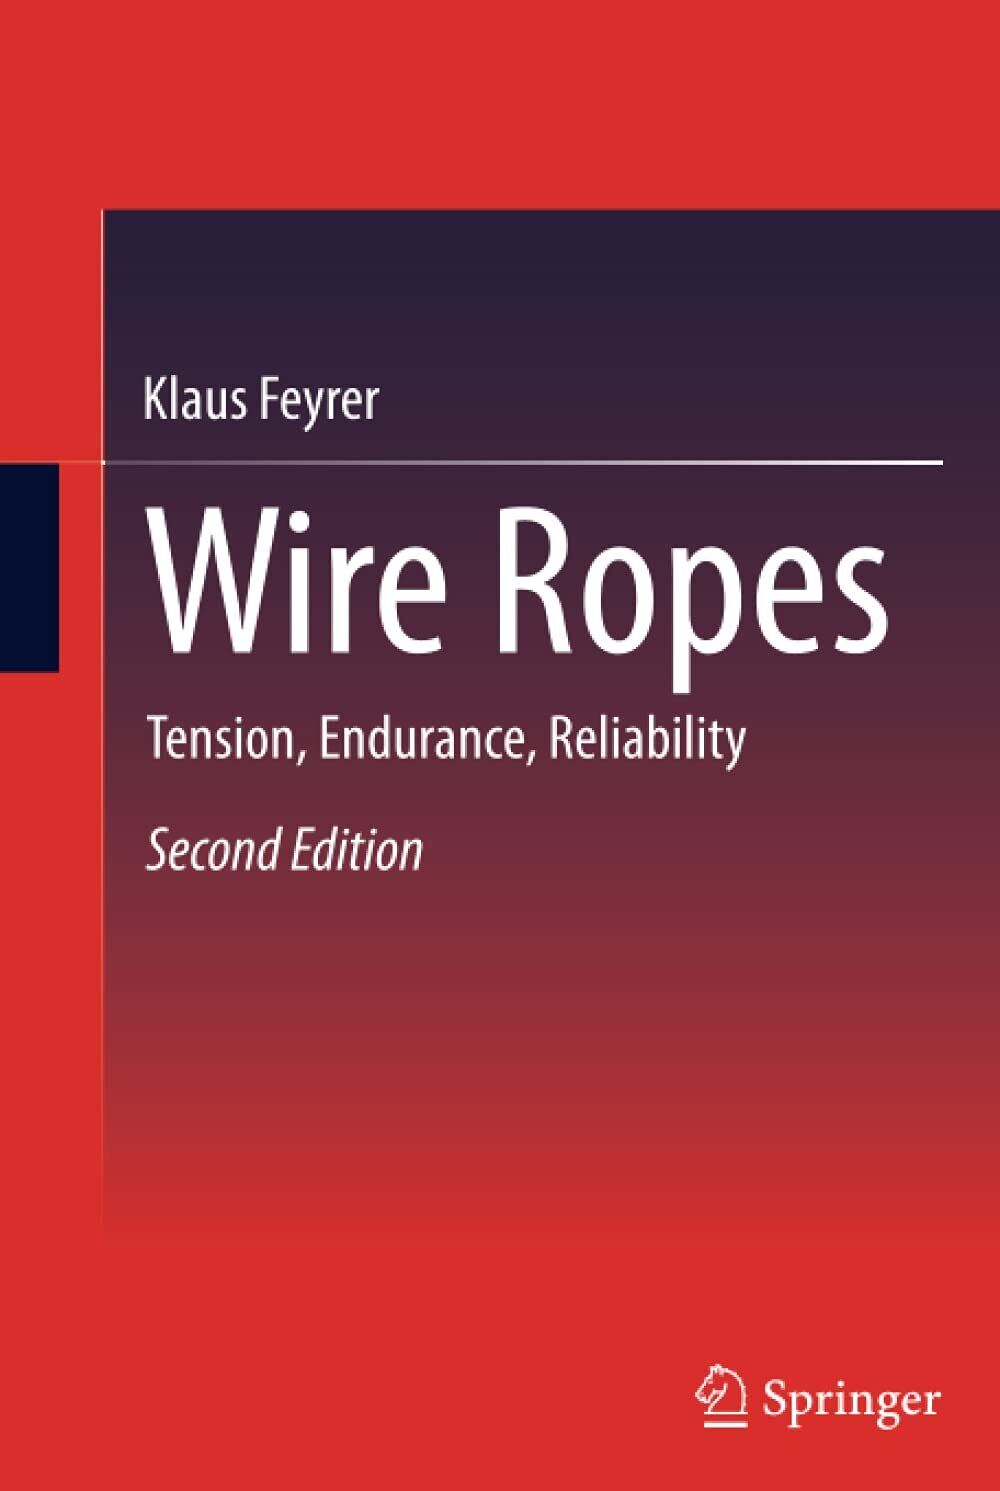 Wire Ropes -  Klaus Feyrer - Springer, 2014